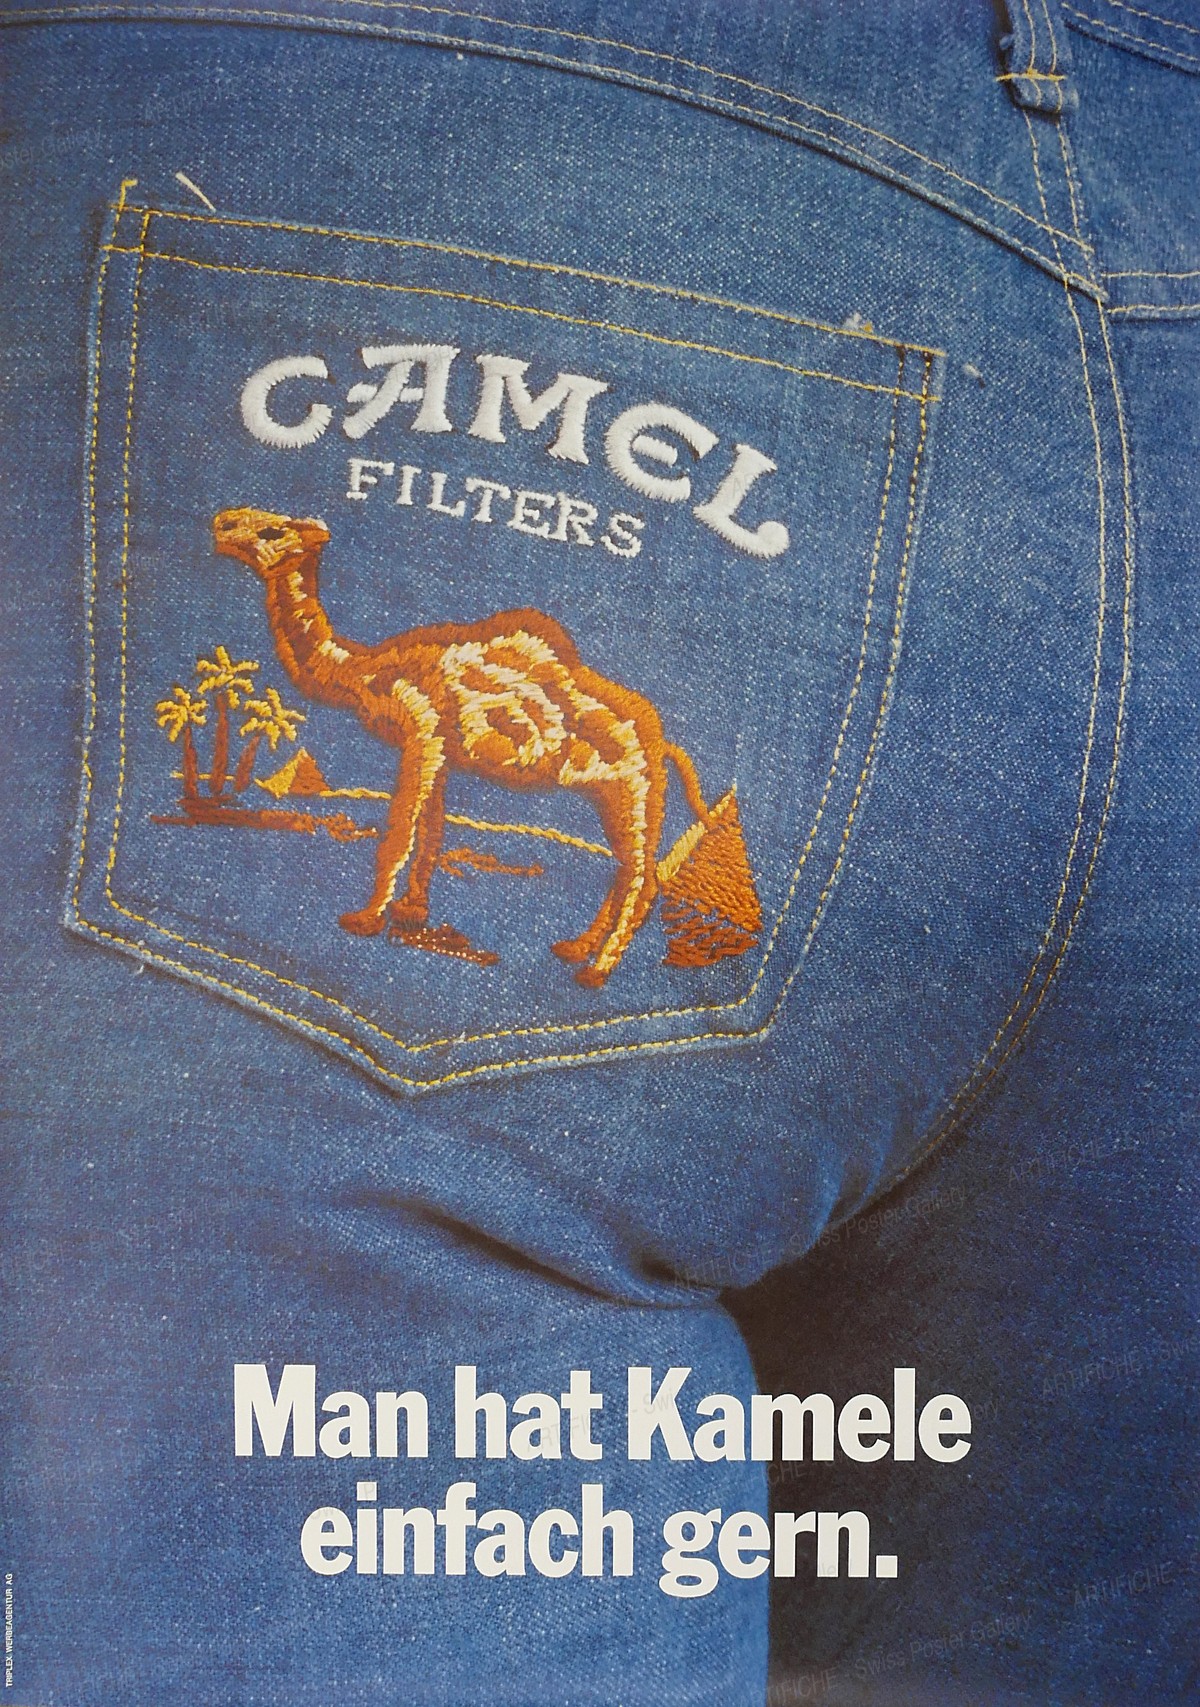 Camel Filters – man hat Kamele einfach gern, Triplex